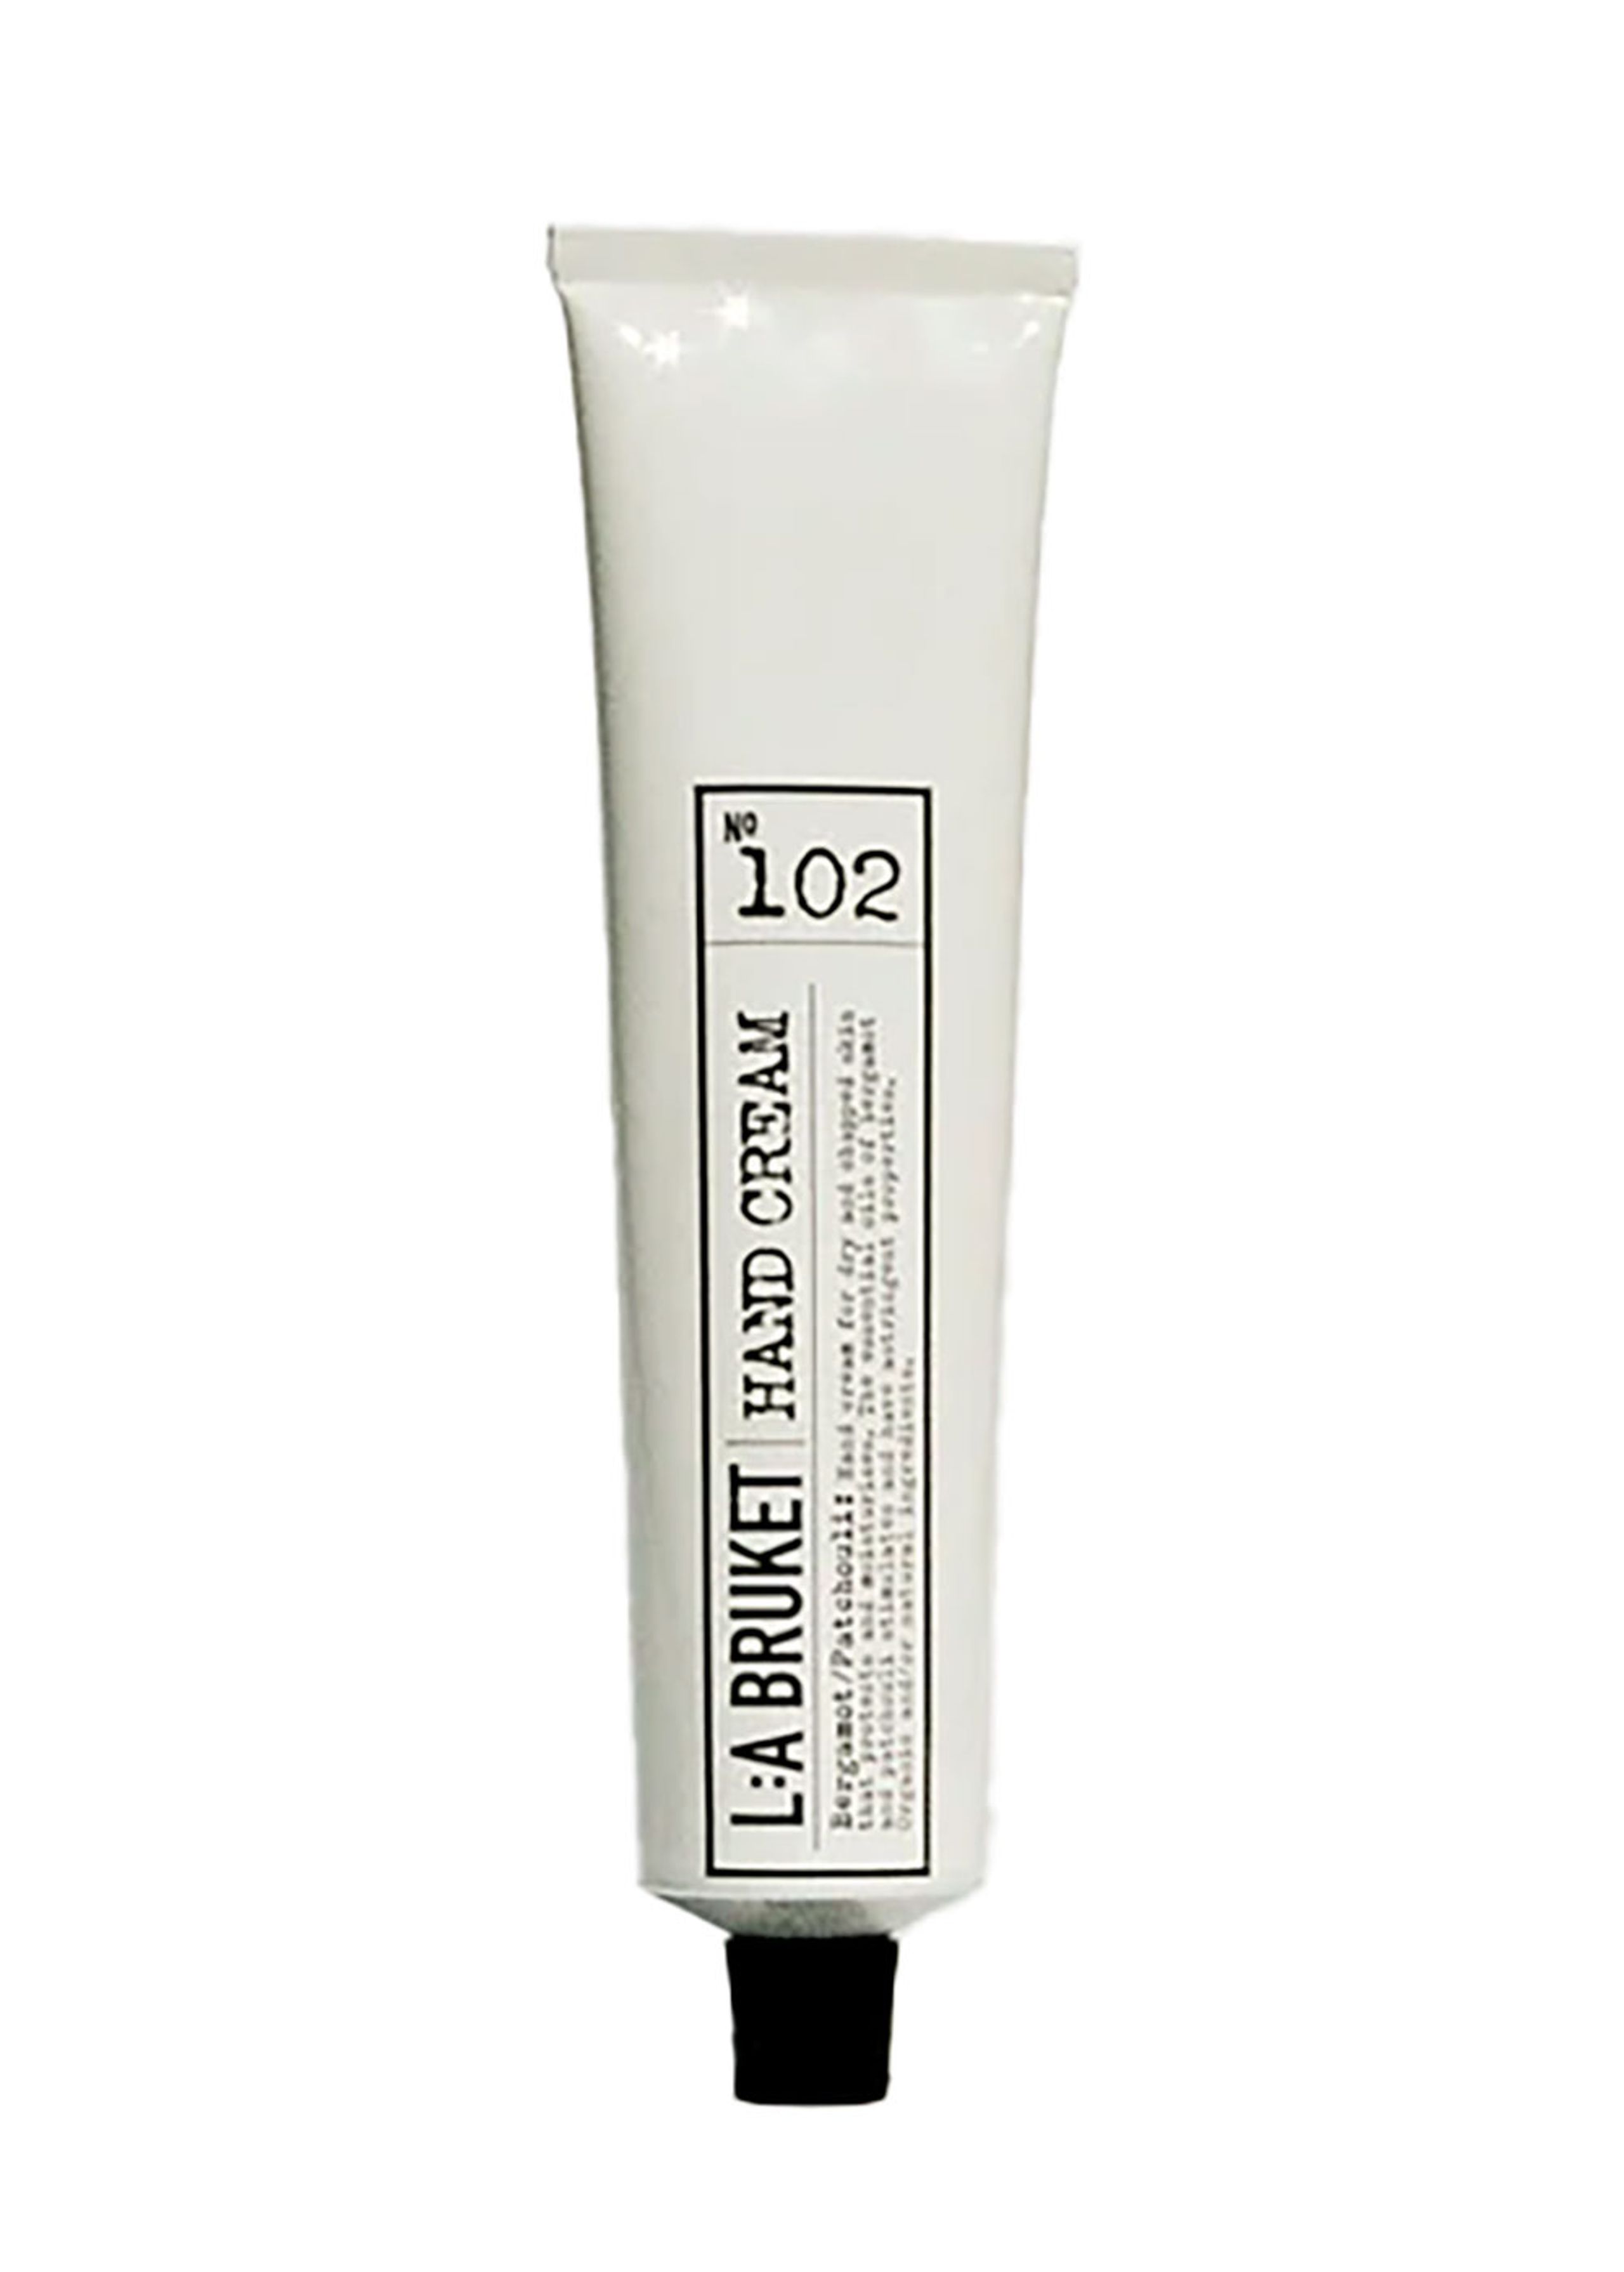 L:A Bruket - Crème pour les mains - L:A Bruket - Hånd creme på tube - No. 102 - Bergamott/Patchouli - 70 ml.